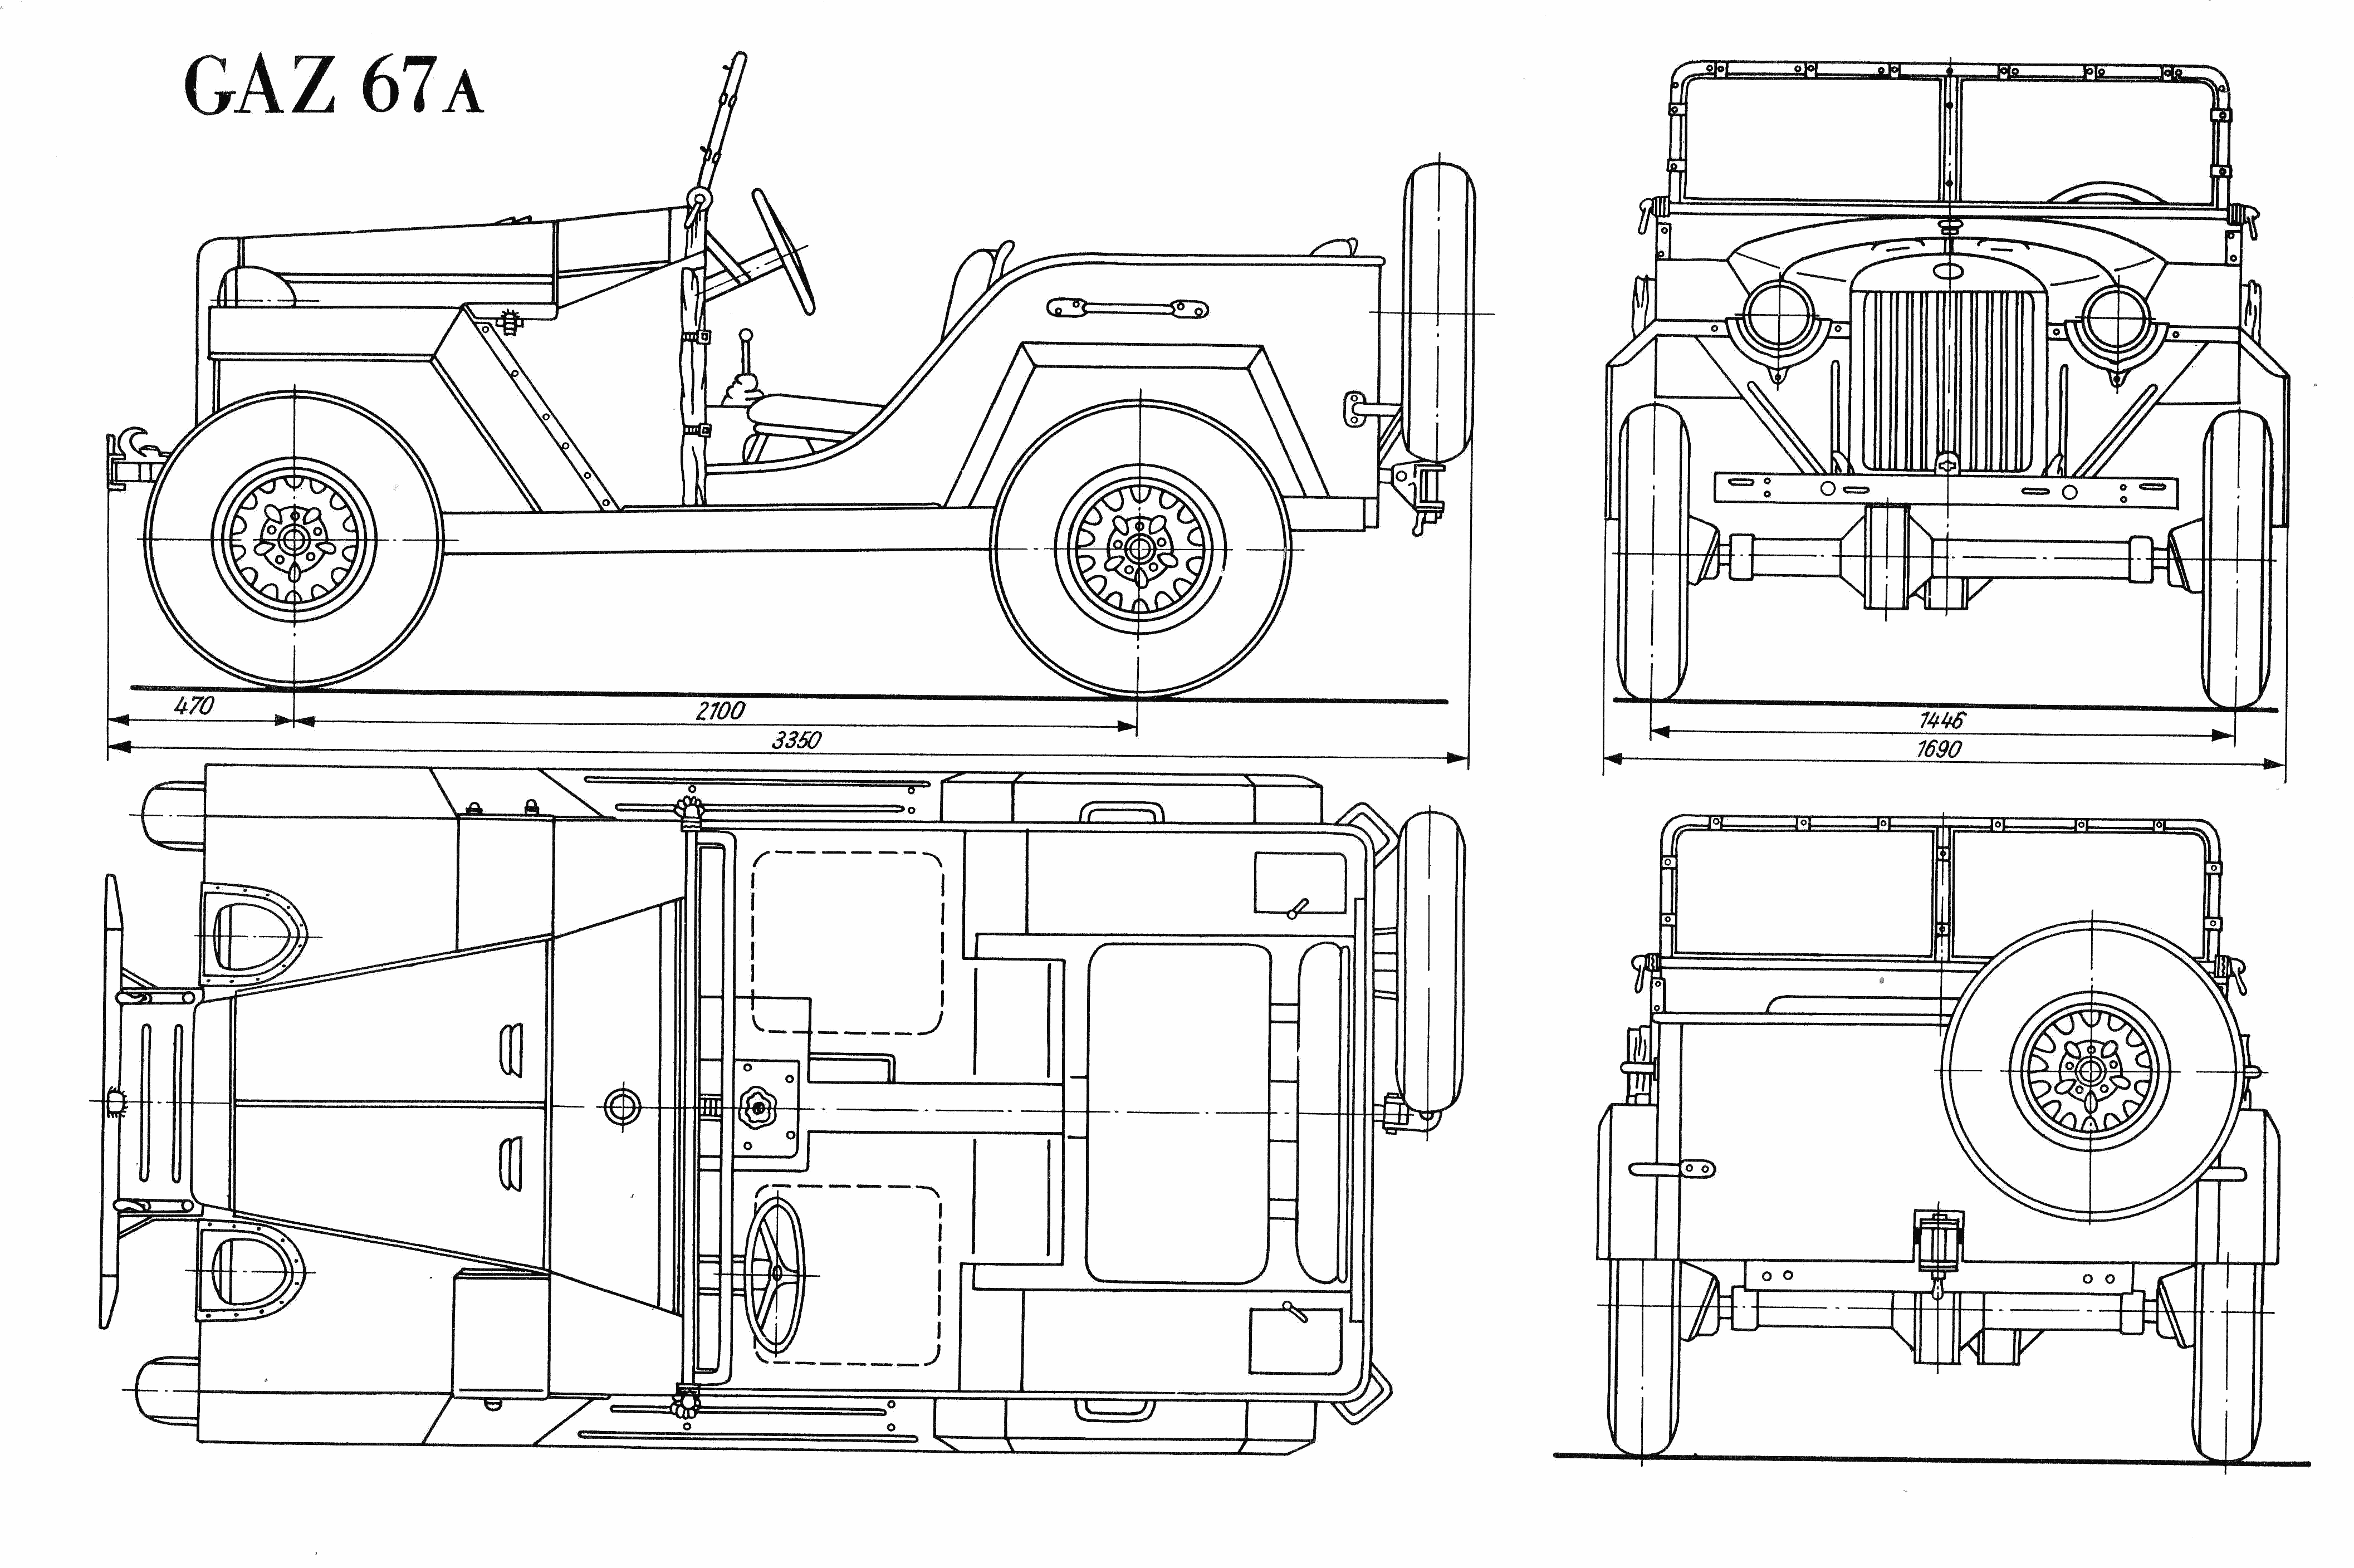 GAZ-67a blueprint